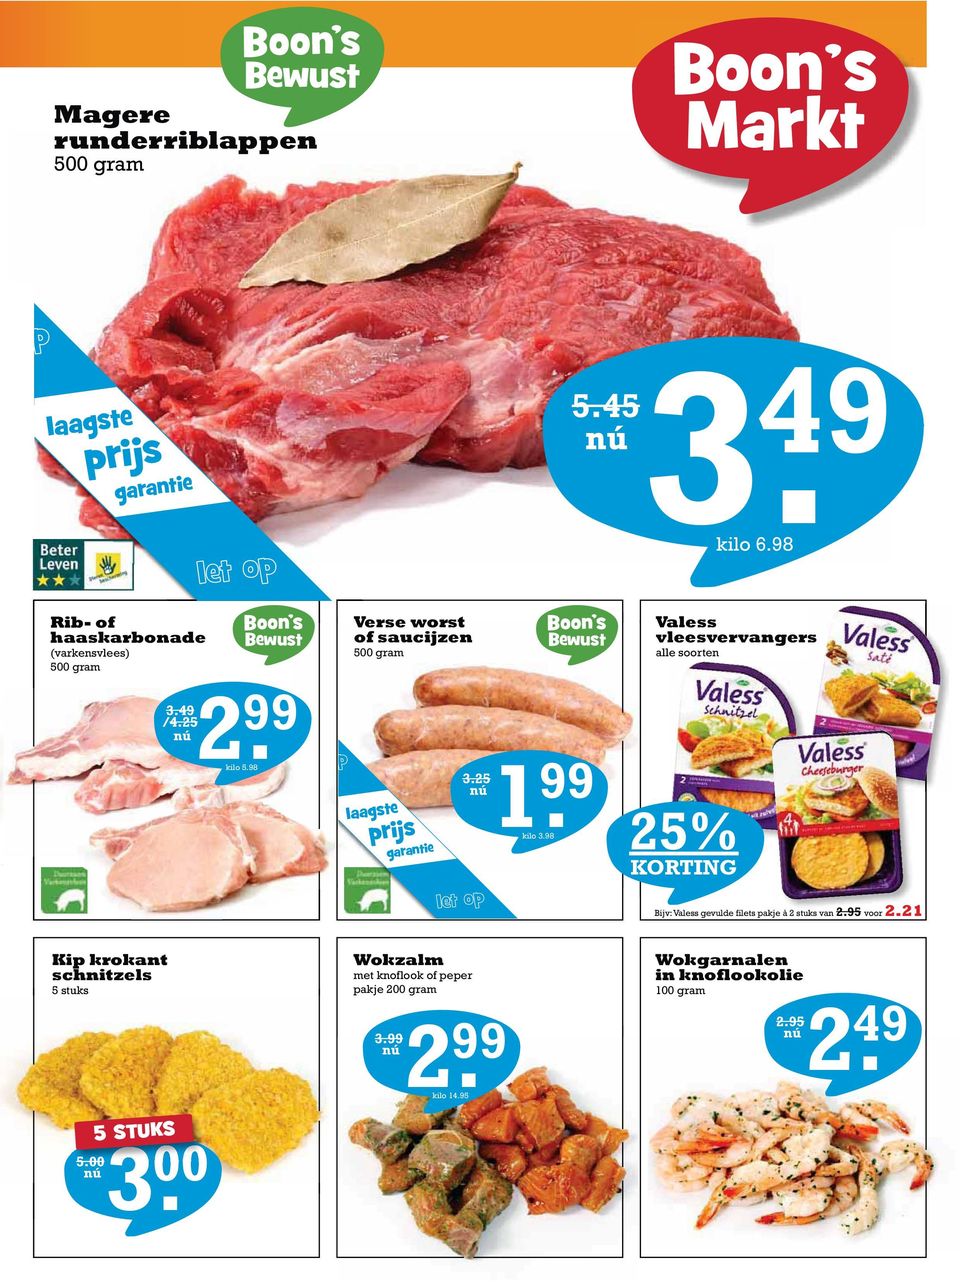 98 Bewust Valess vleesvervangers 25% KORTING Bijv: Valess gevulde filets pakje à 2 stuks van 2.95 voor 2.